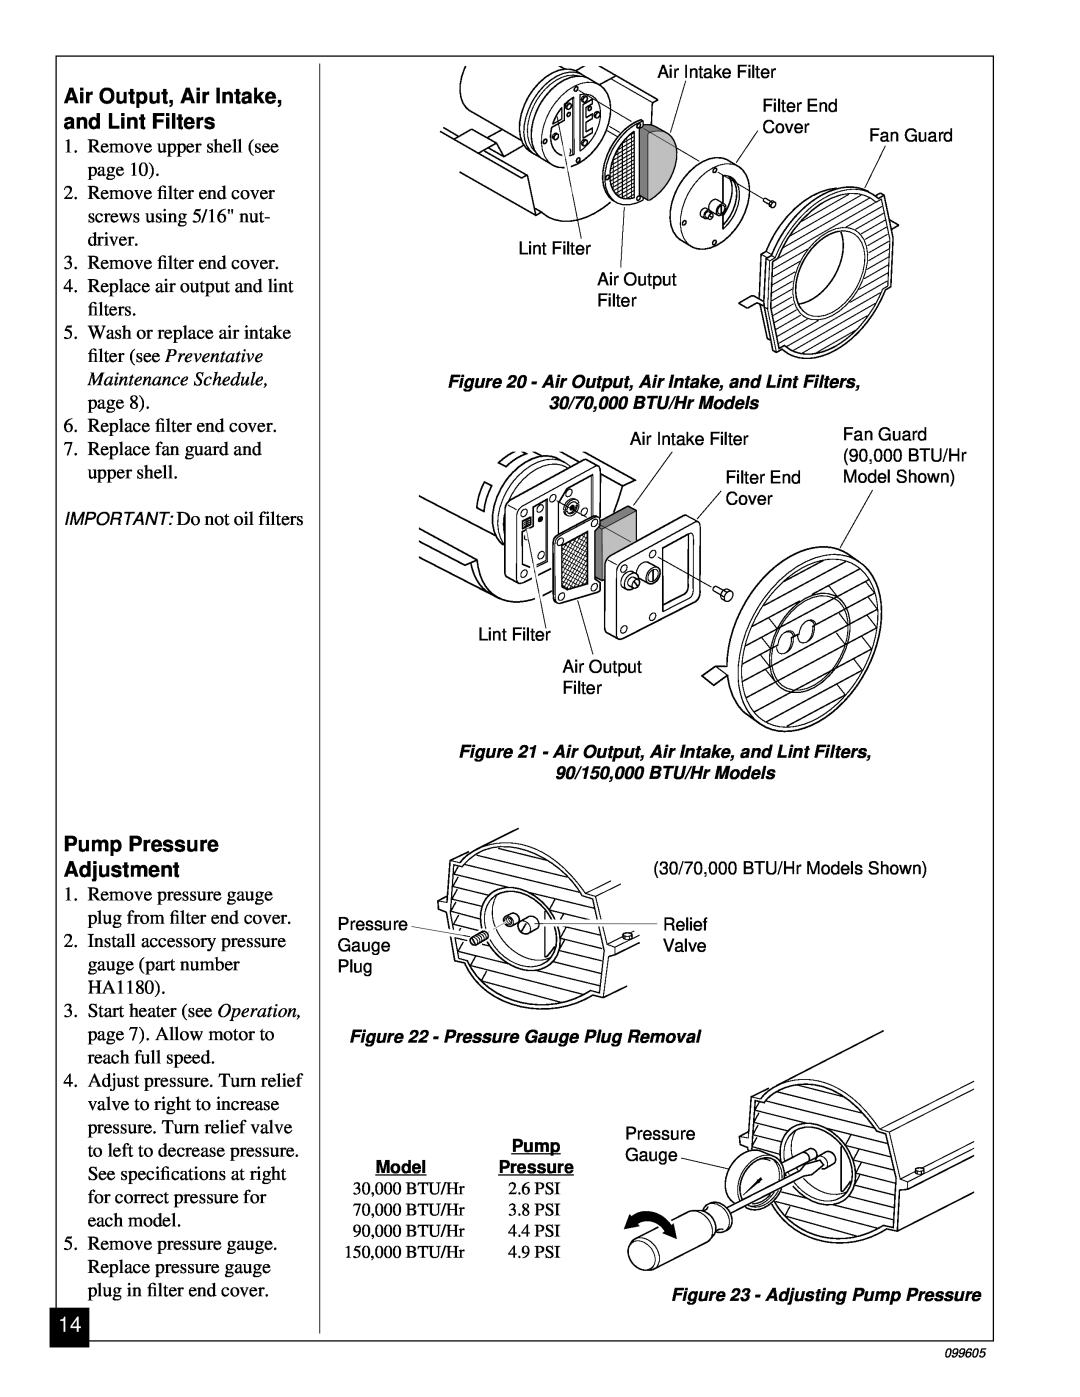 Desa H.S.I. Series owner manual Air Output, Air Intake, and Lint Filters, Pump Pressure Adjustment 